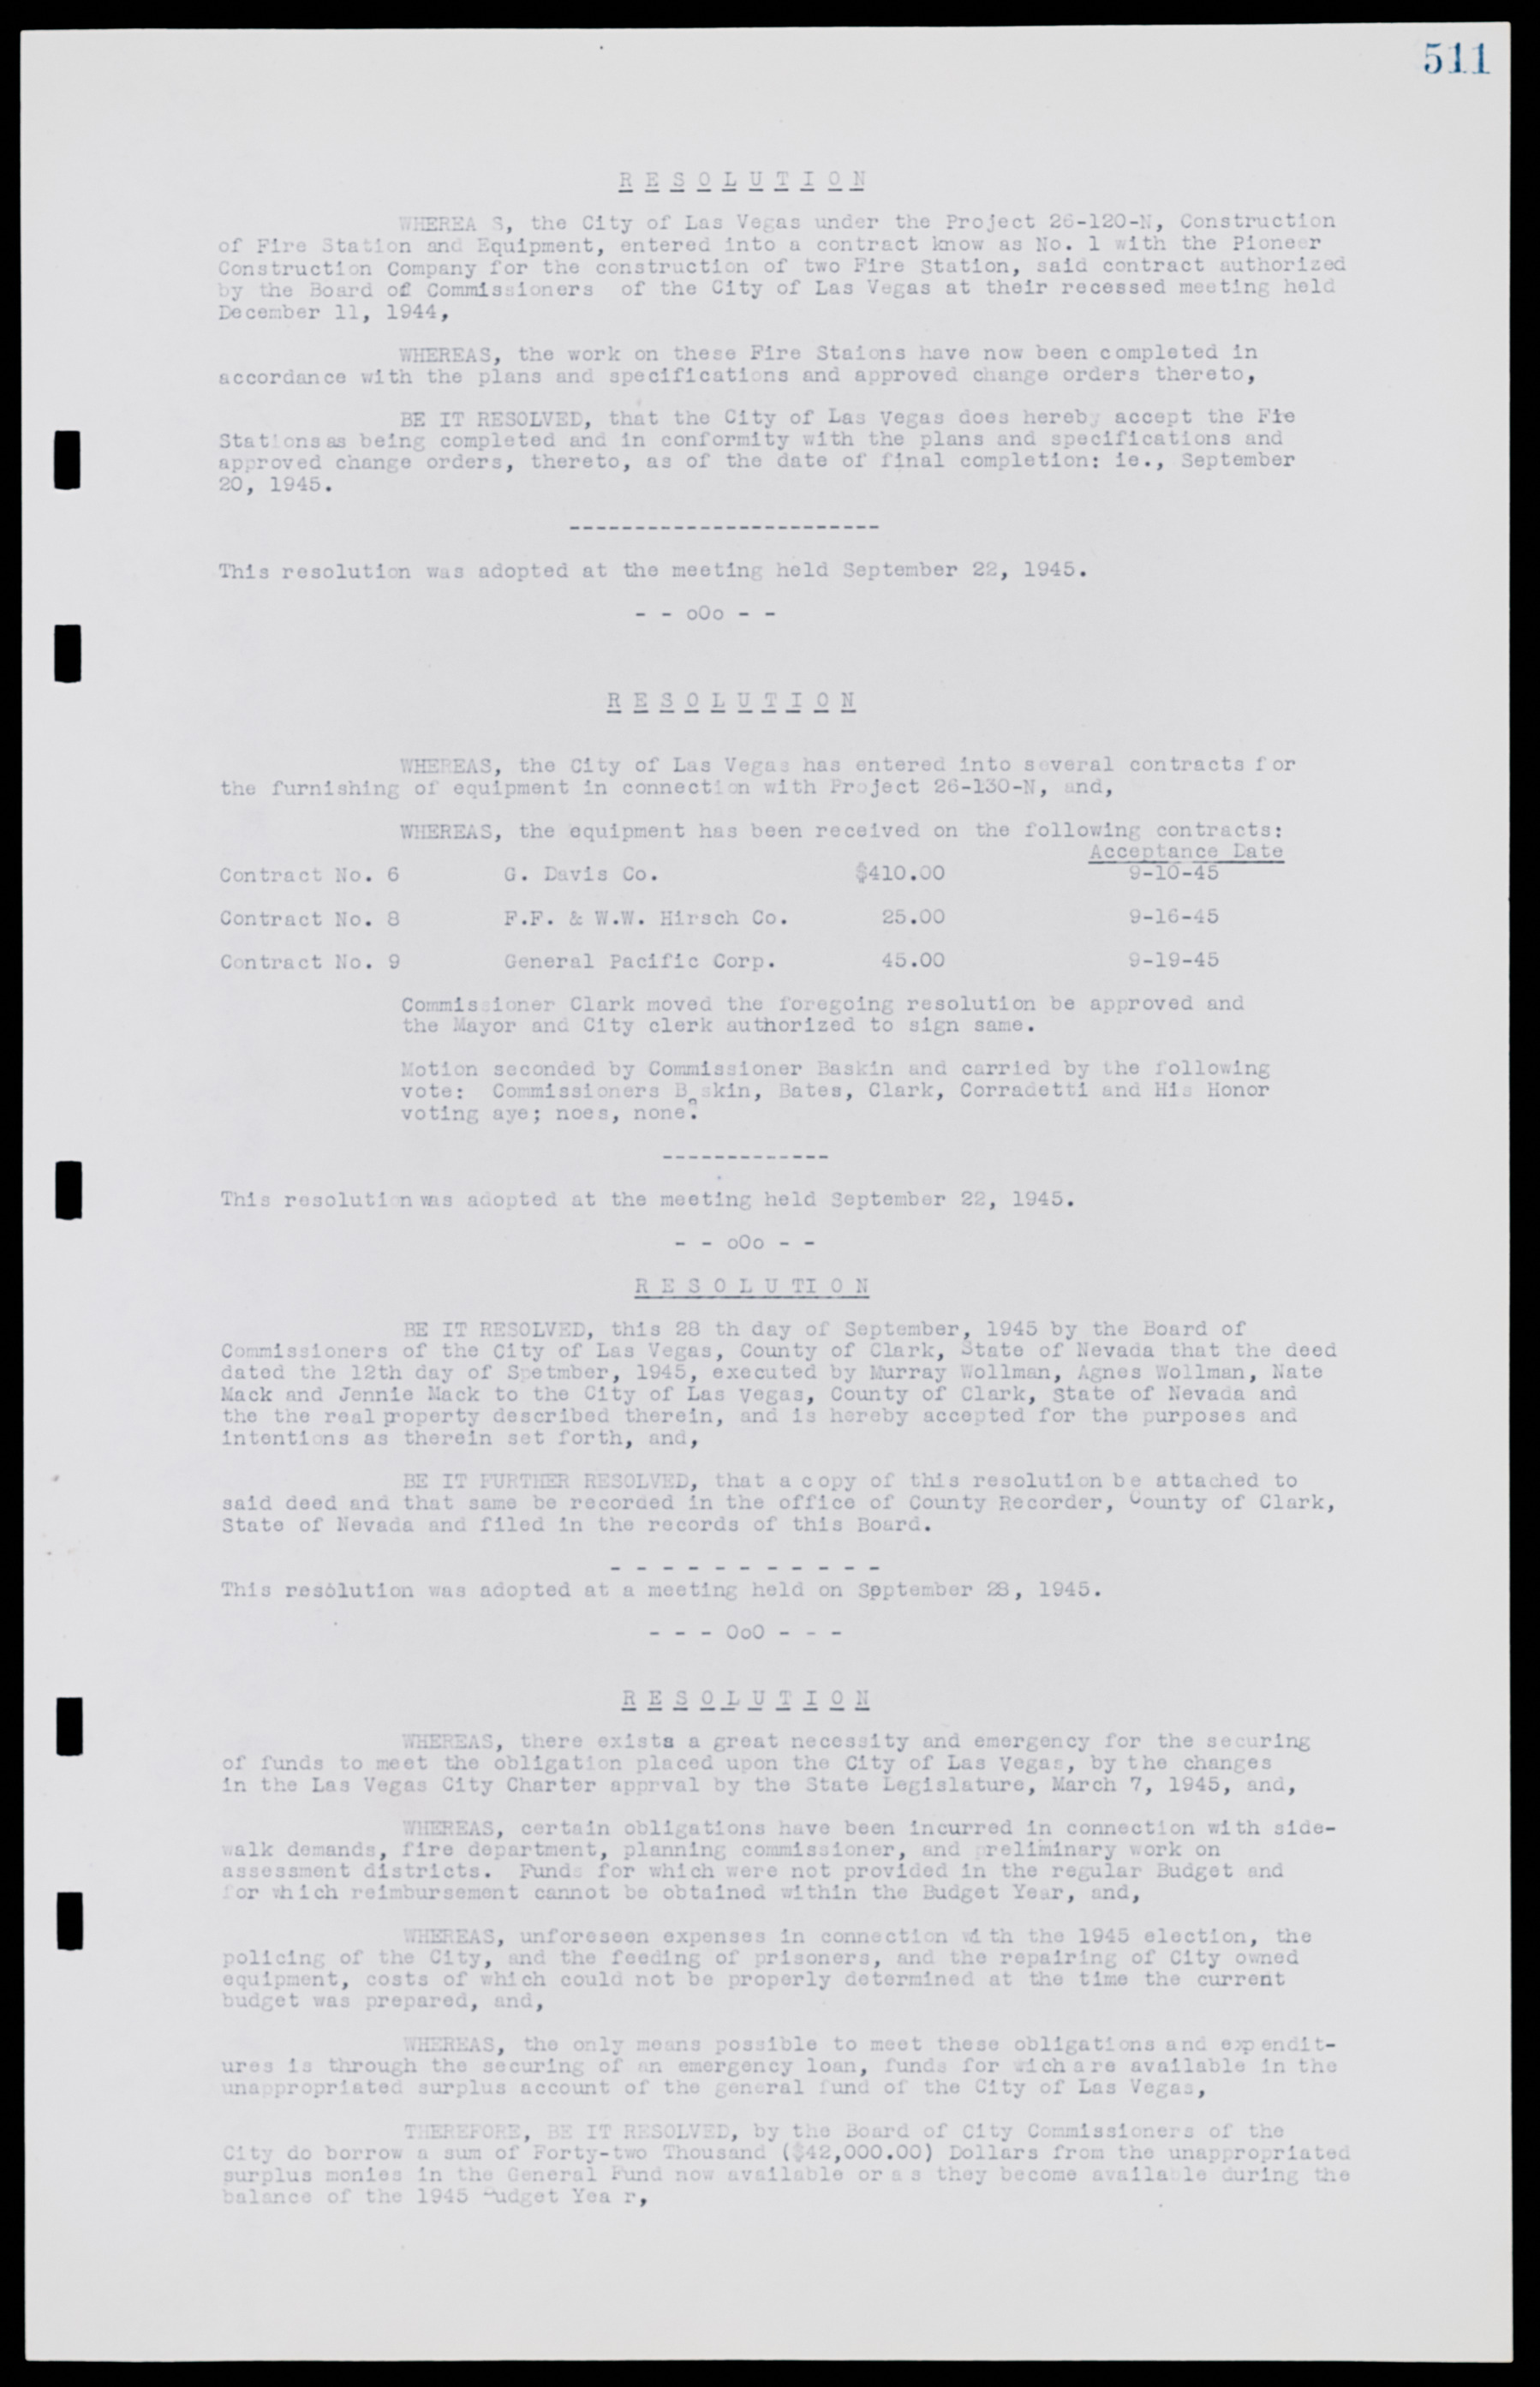 Las Vegas City Commission Minutes, January 7, 1947 to October 26, 1949, lvc000006-541